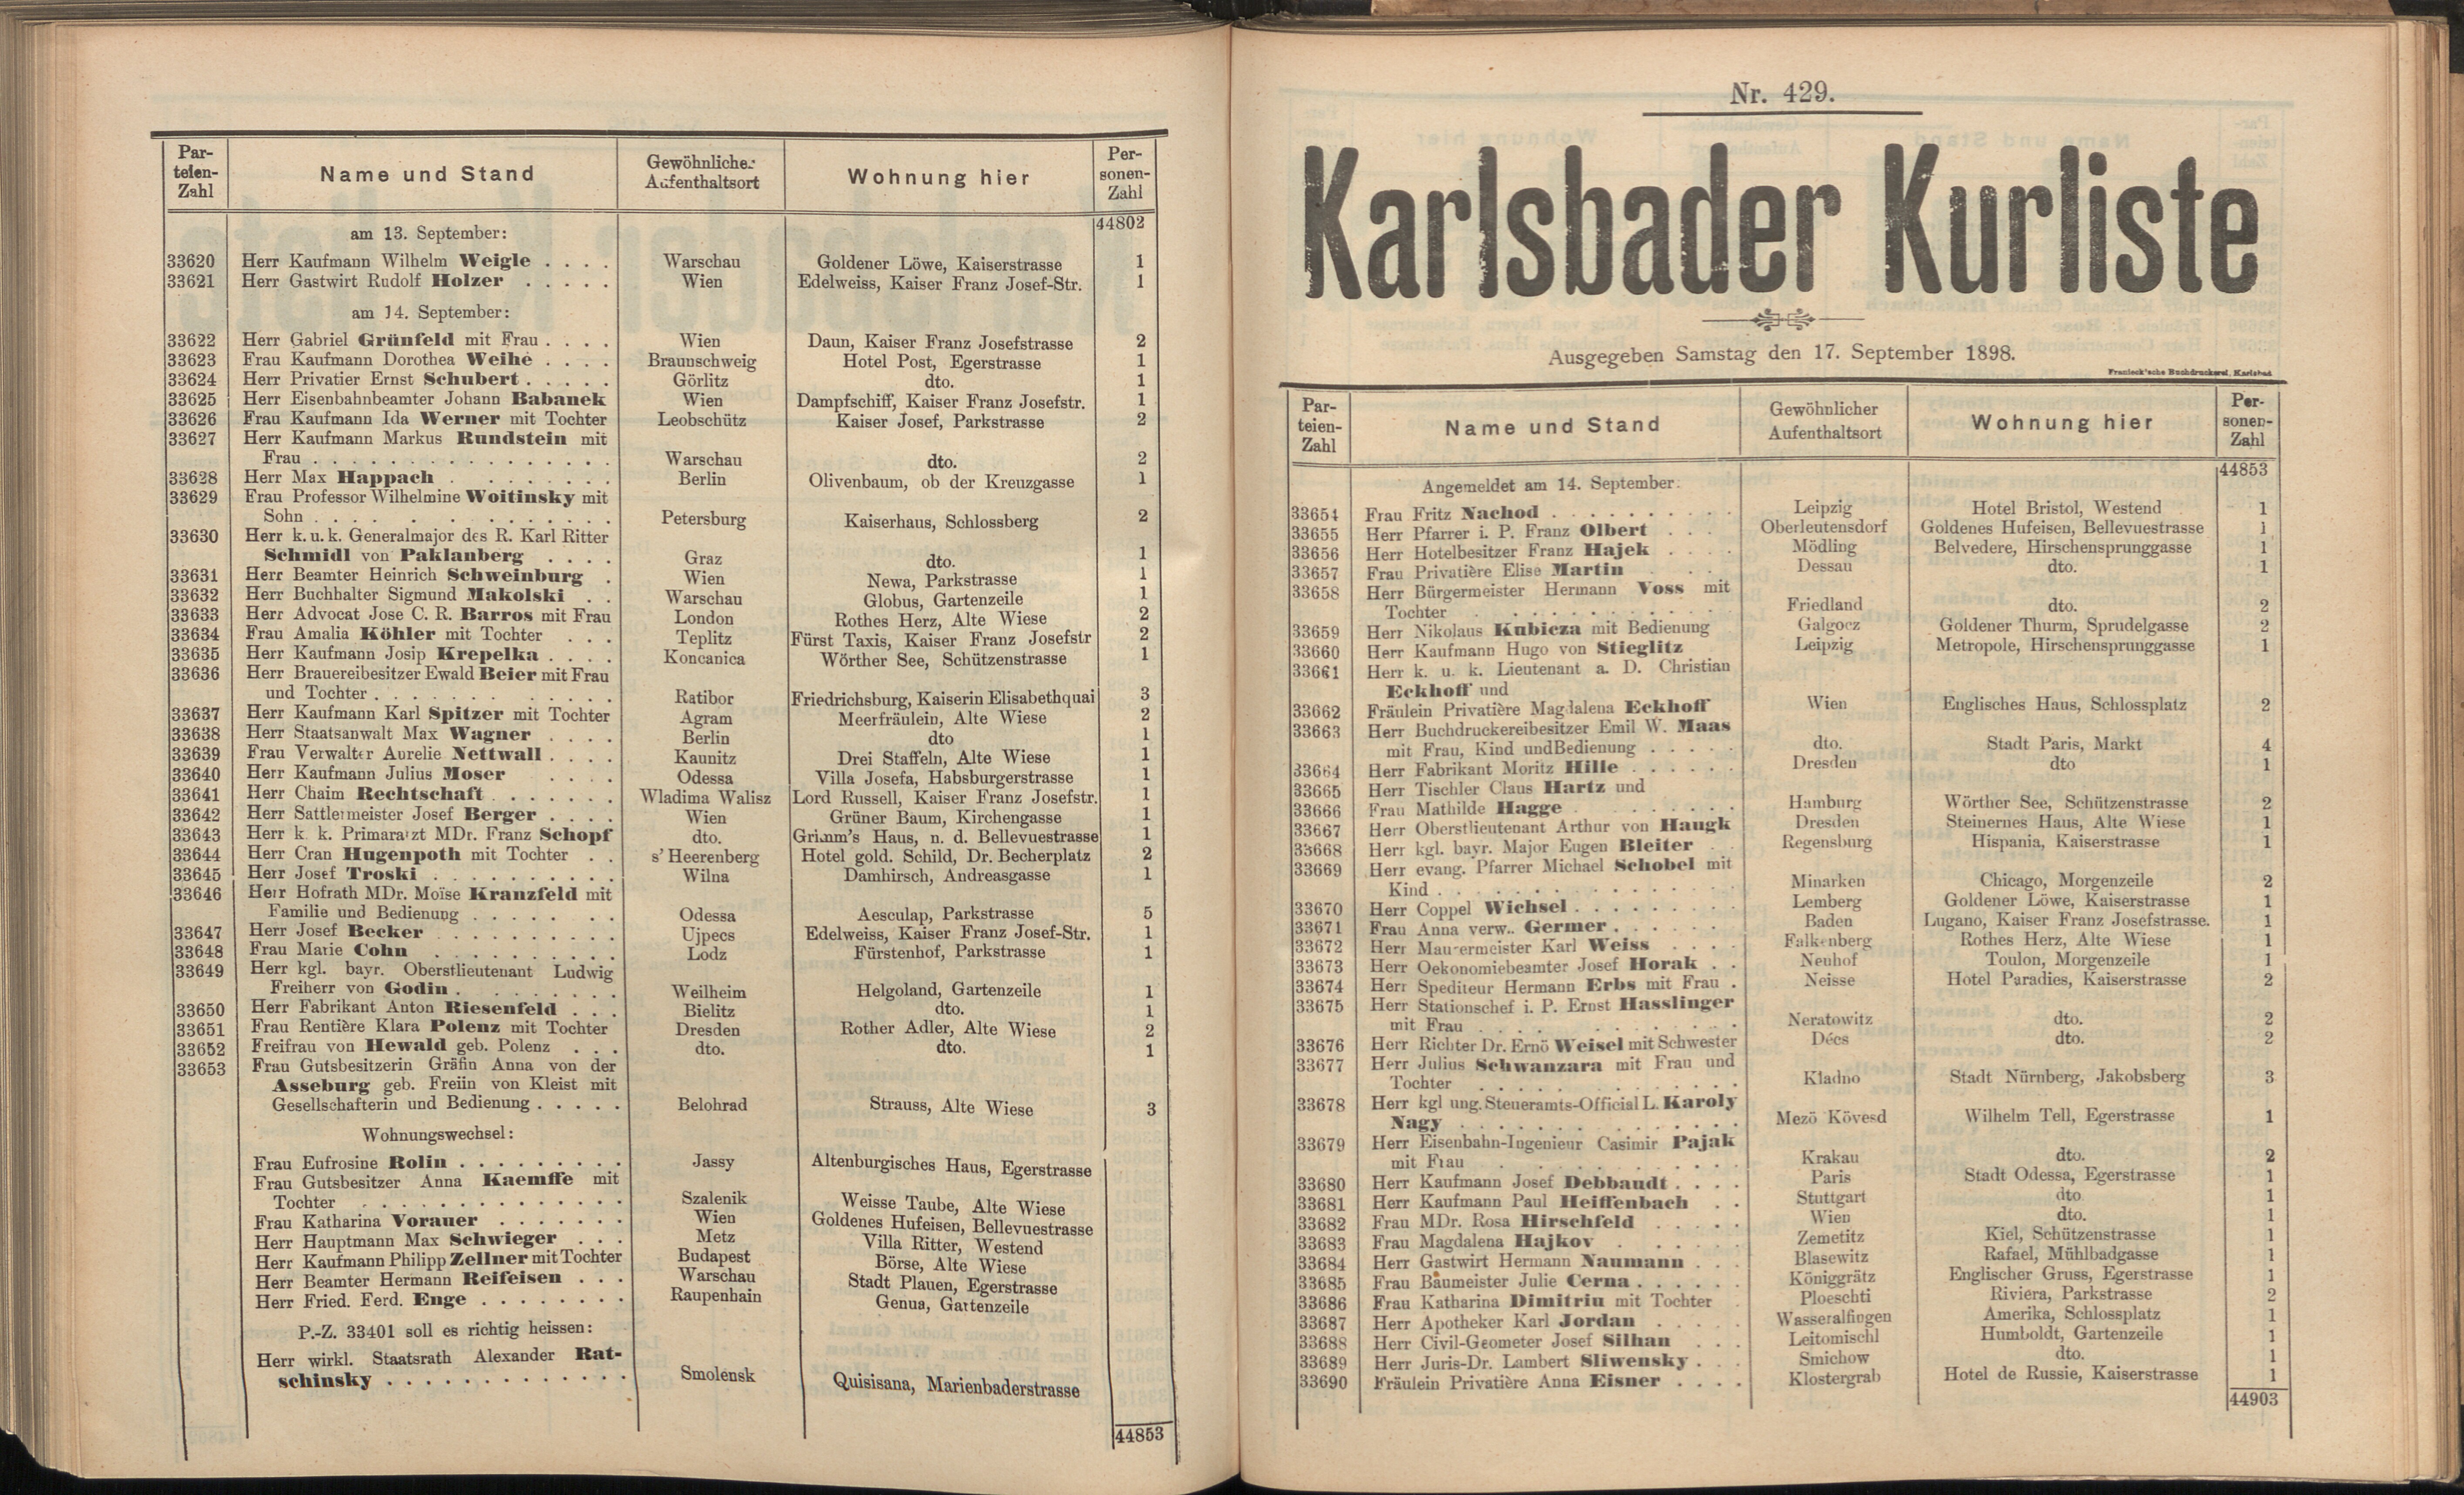 445. soap-kv_knihovna_karlsbader-kurliste-1898_4460